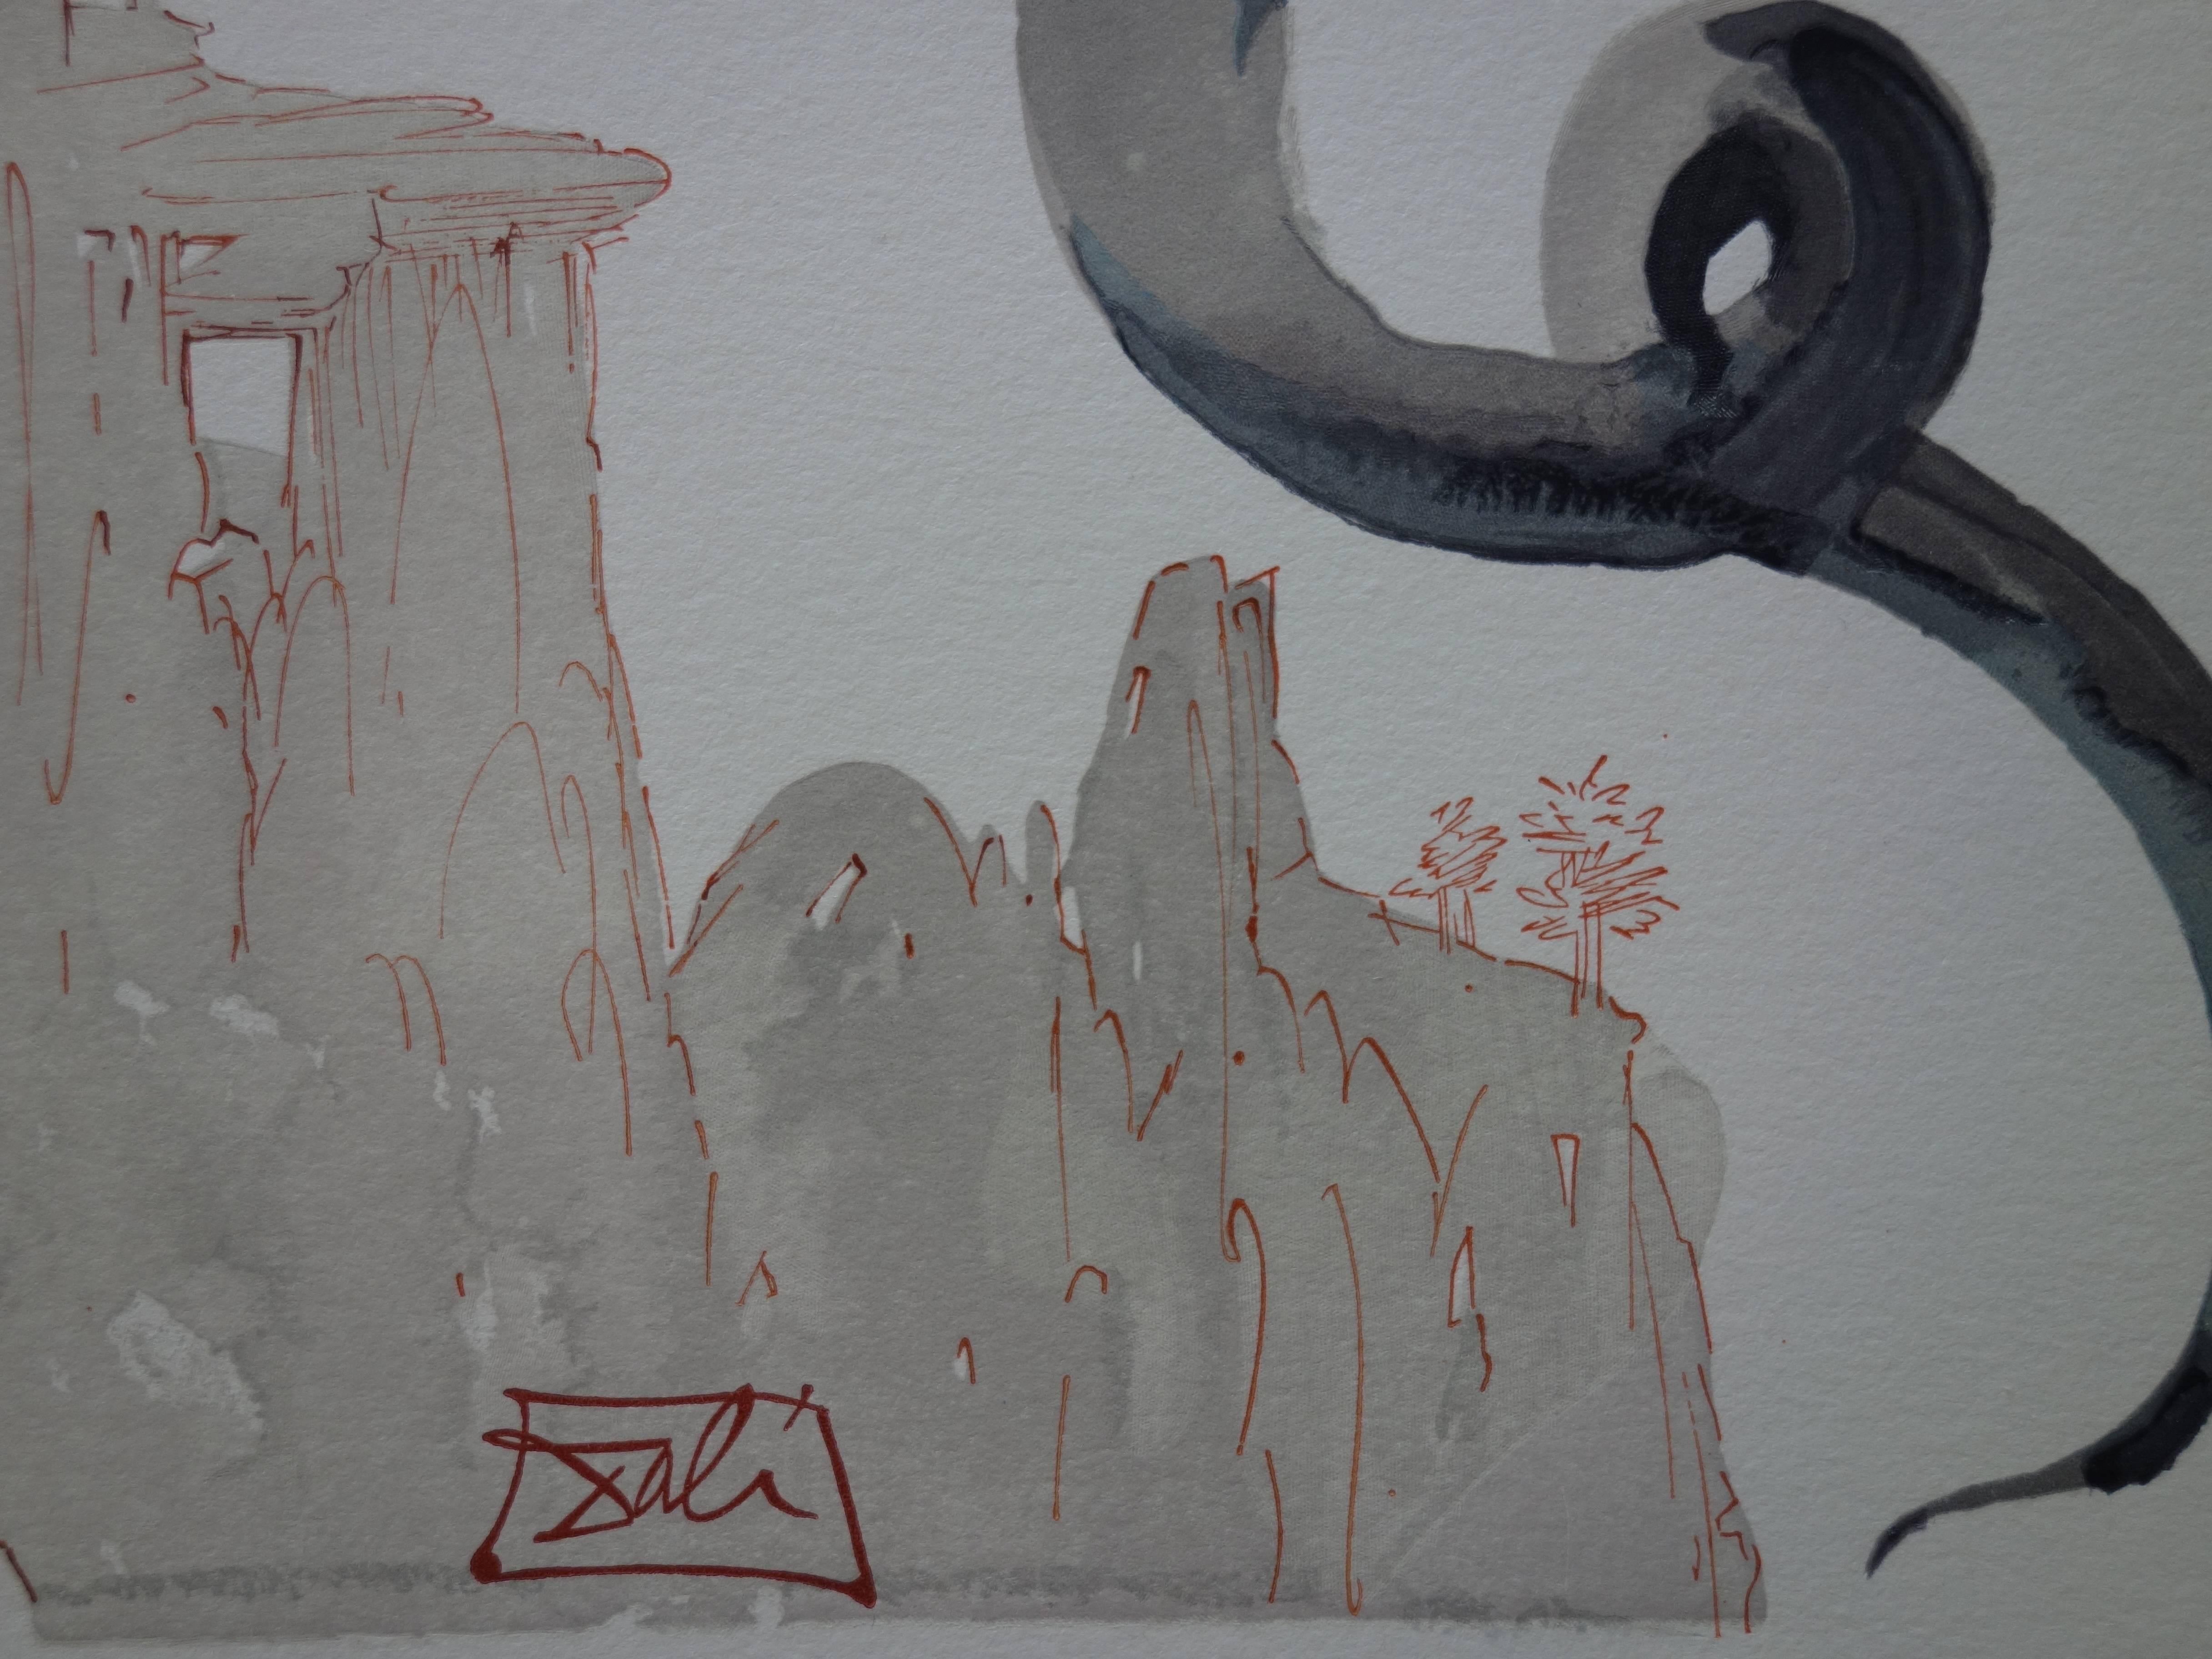 Hell 18 - The usurers (Man on a Dragon) - Woodcut - 1963 - Modern Art by Salvador Dalí